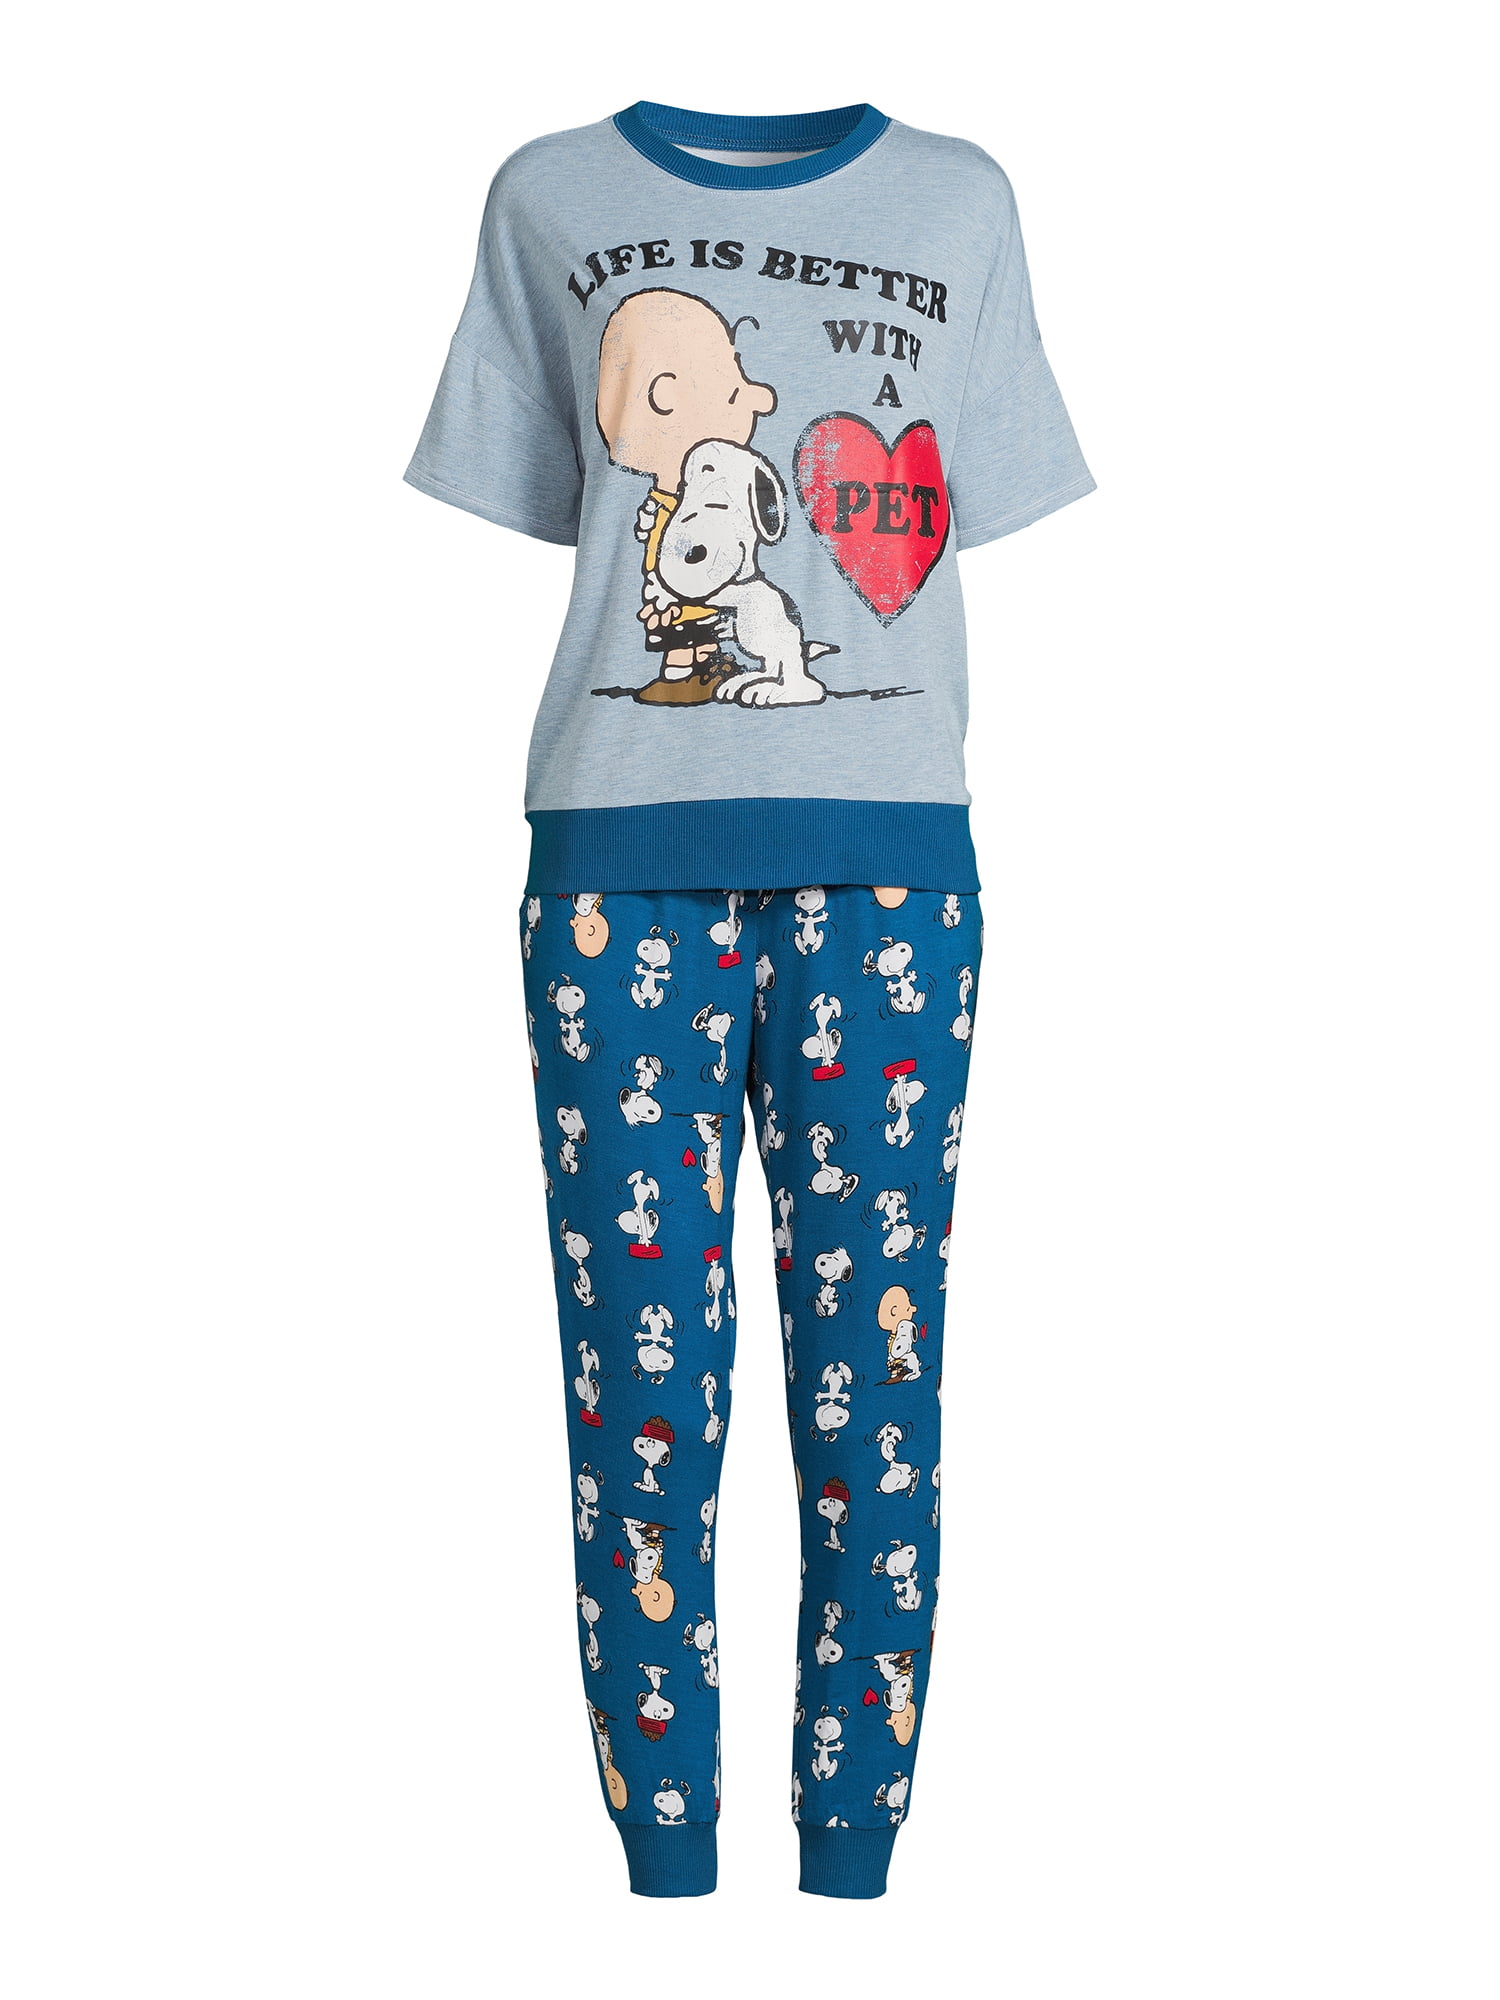 Peanuts Women\'s 2-Piece Set, Snoopy Pajama